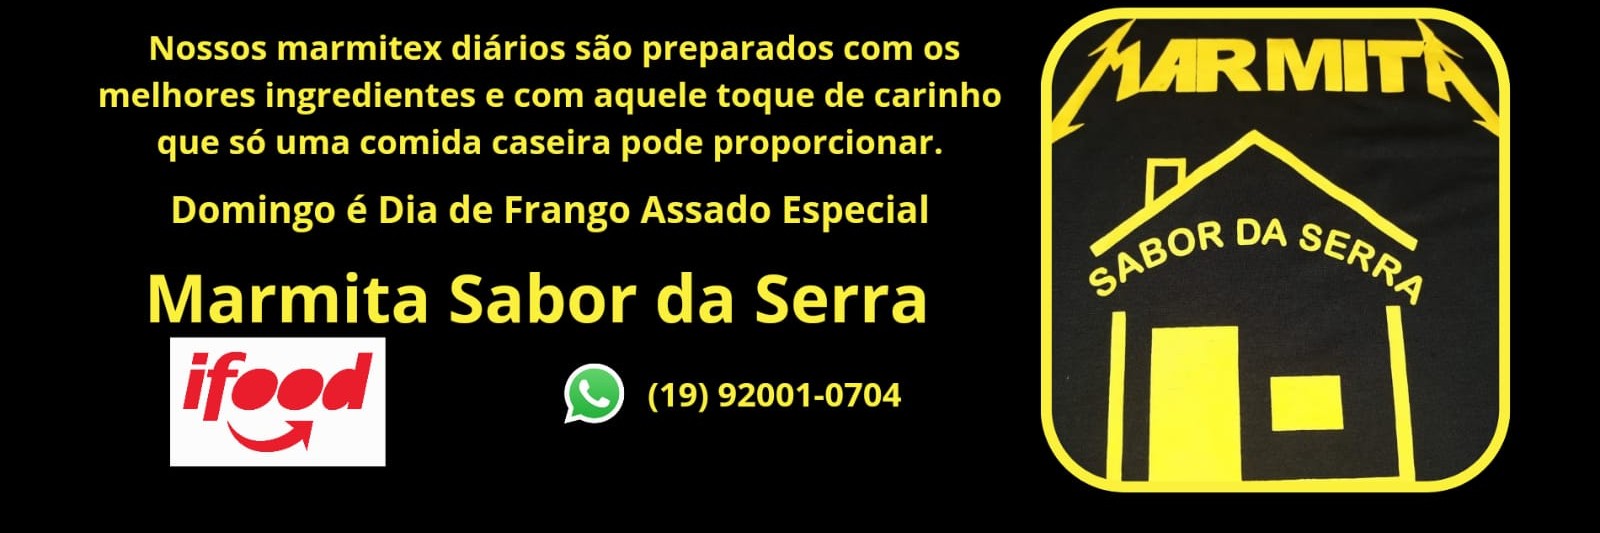 Marmita Sabor da Serra - Limeira-SP